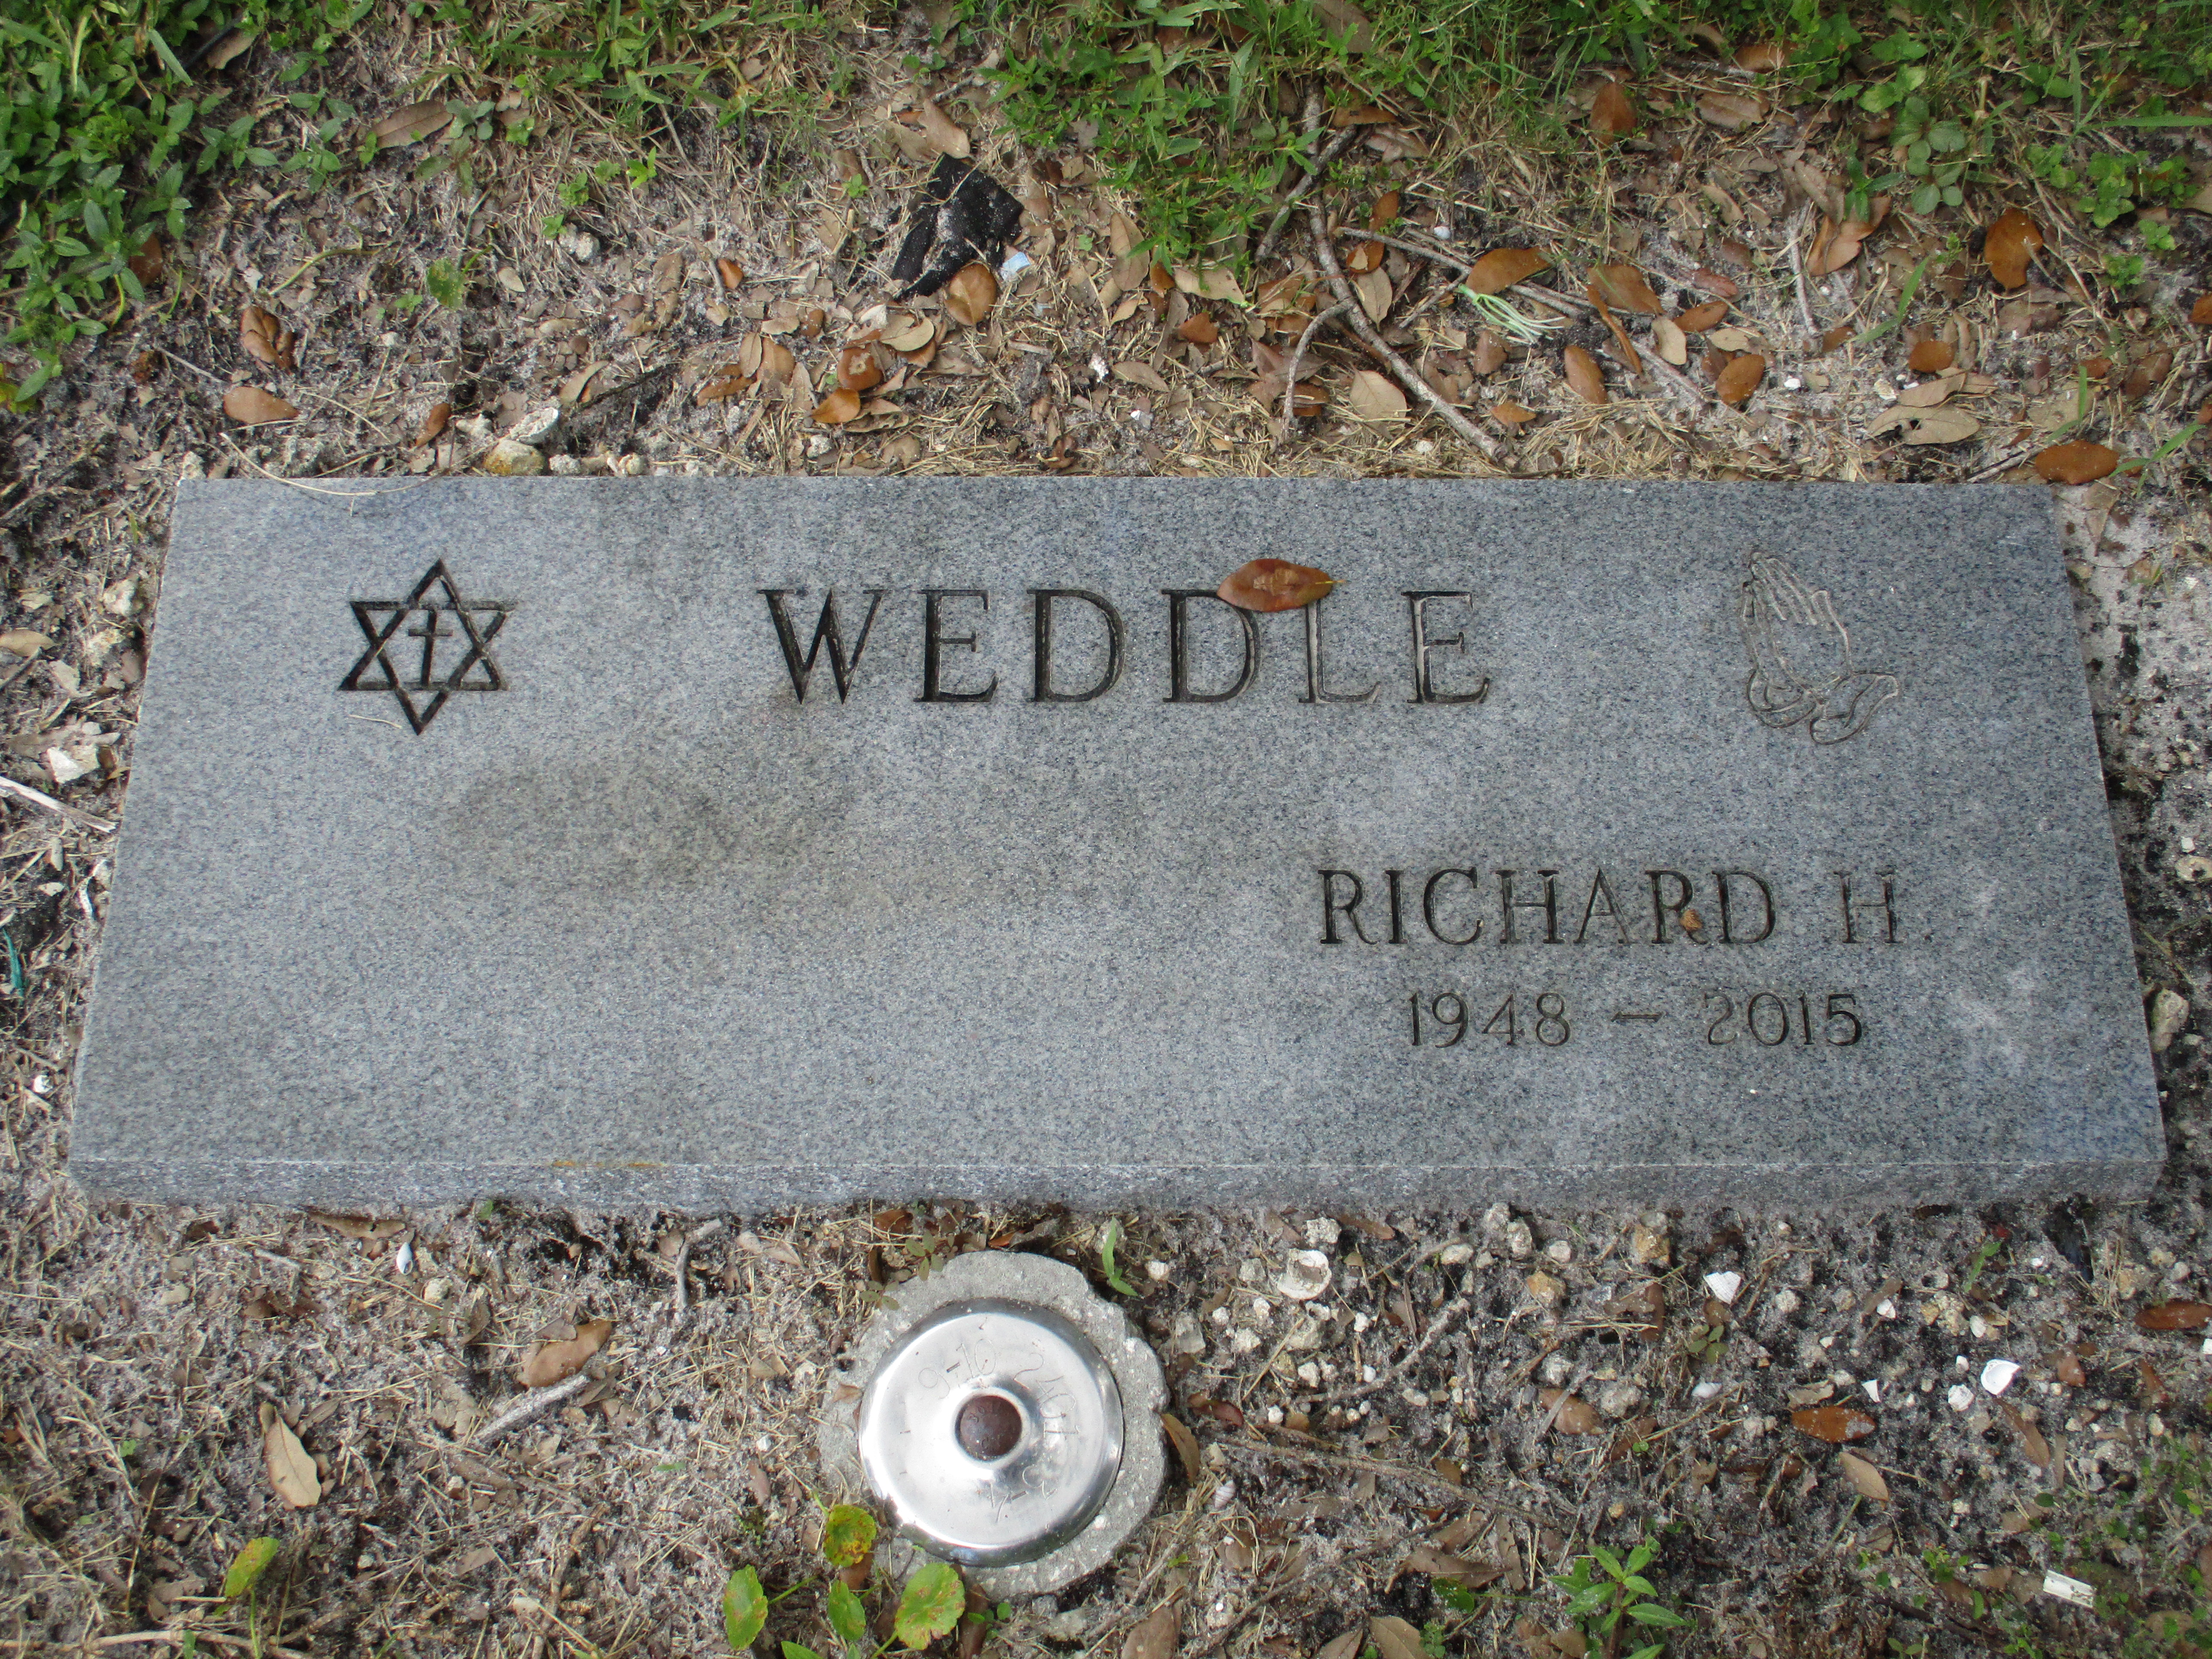 Richard H Weddle